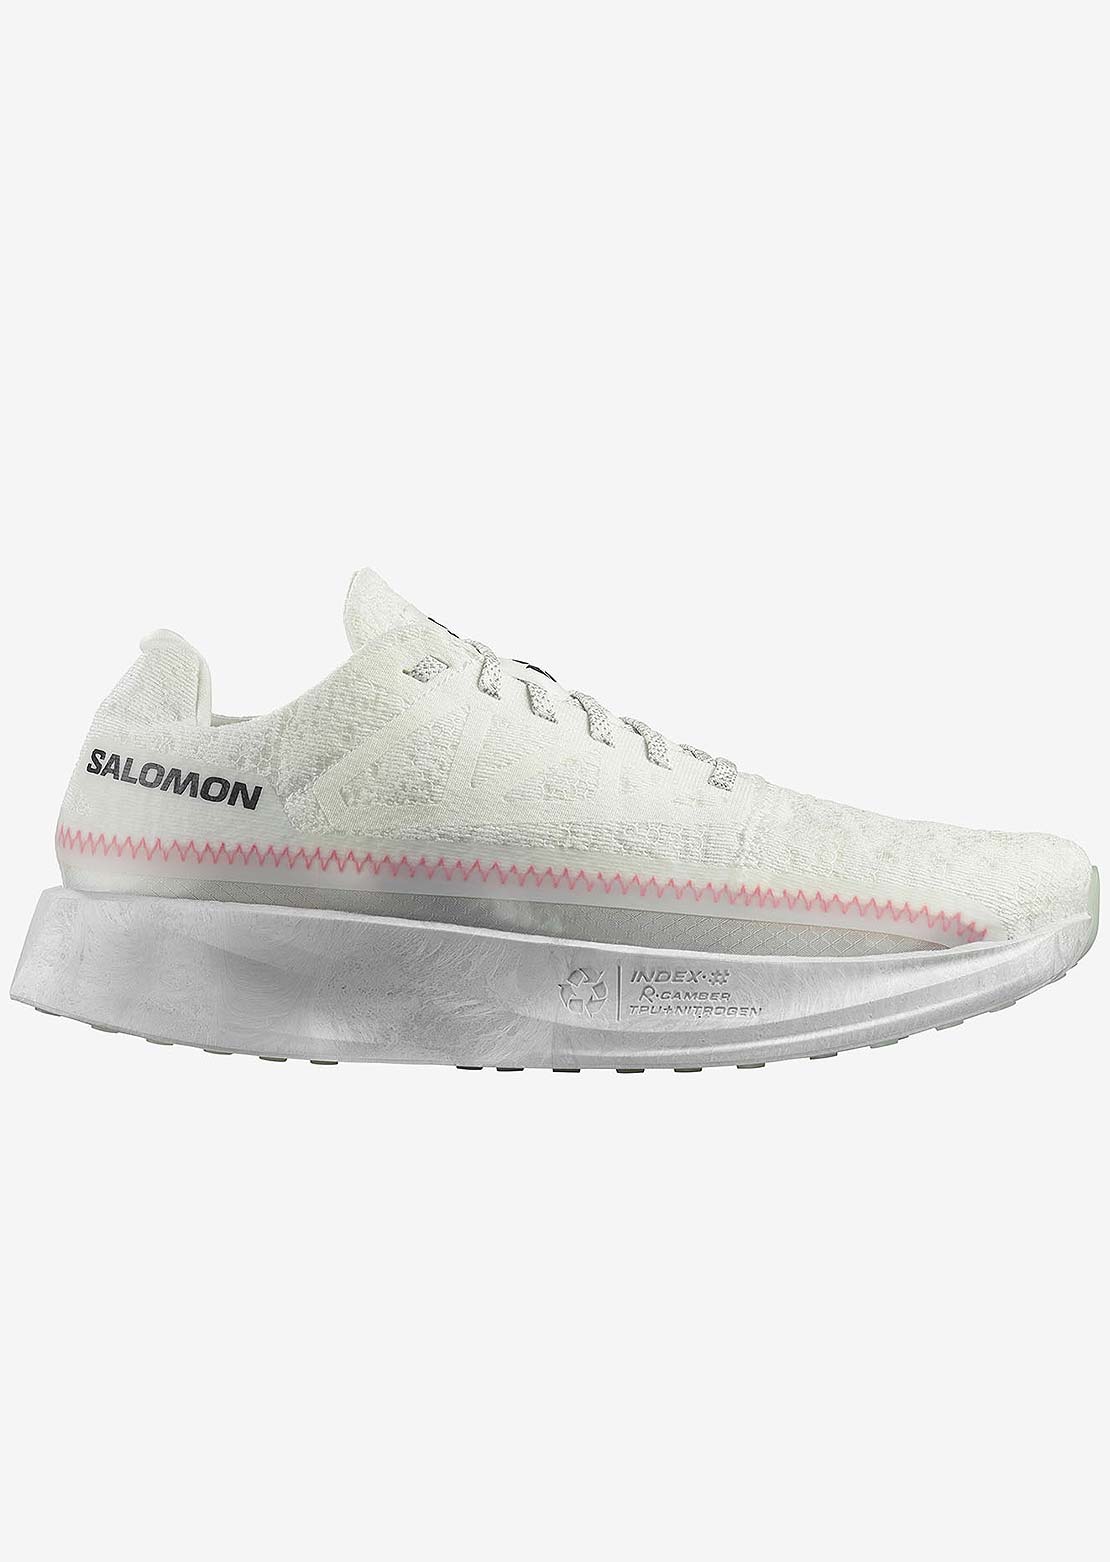 Salomon Unisex Index 03 Shoes White/Black/Cherry Tomato